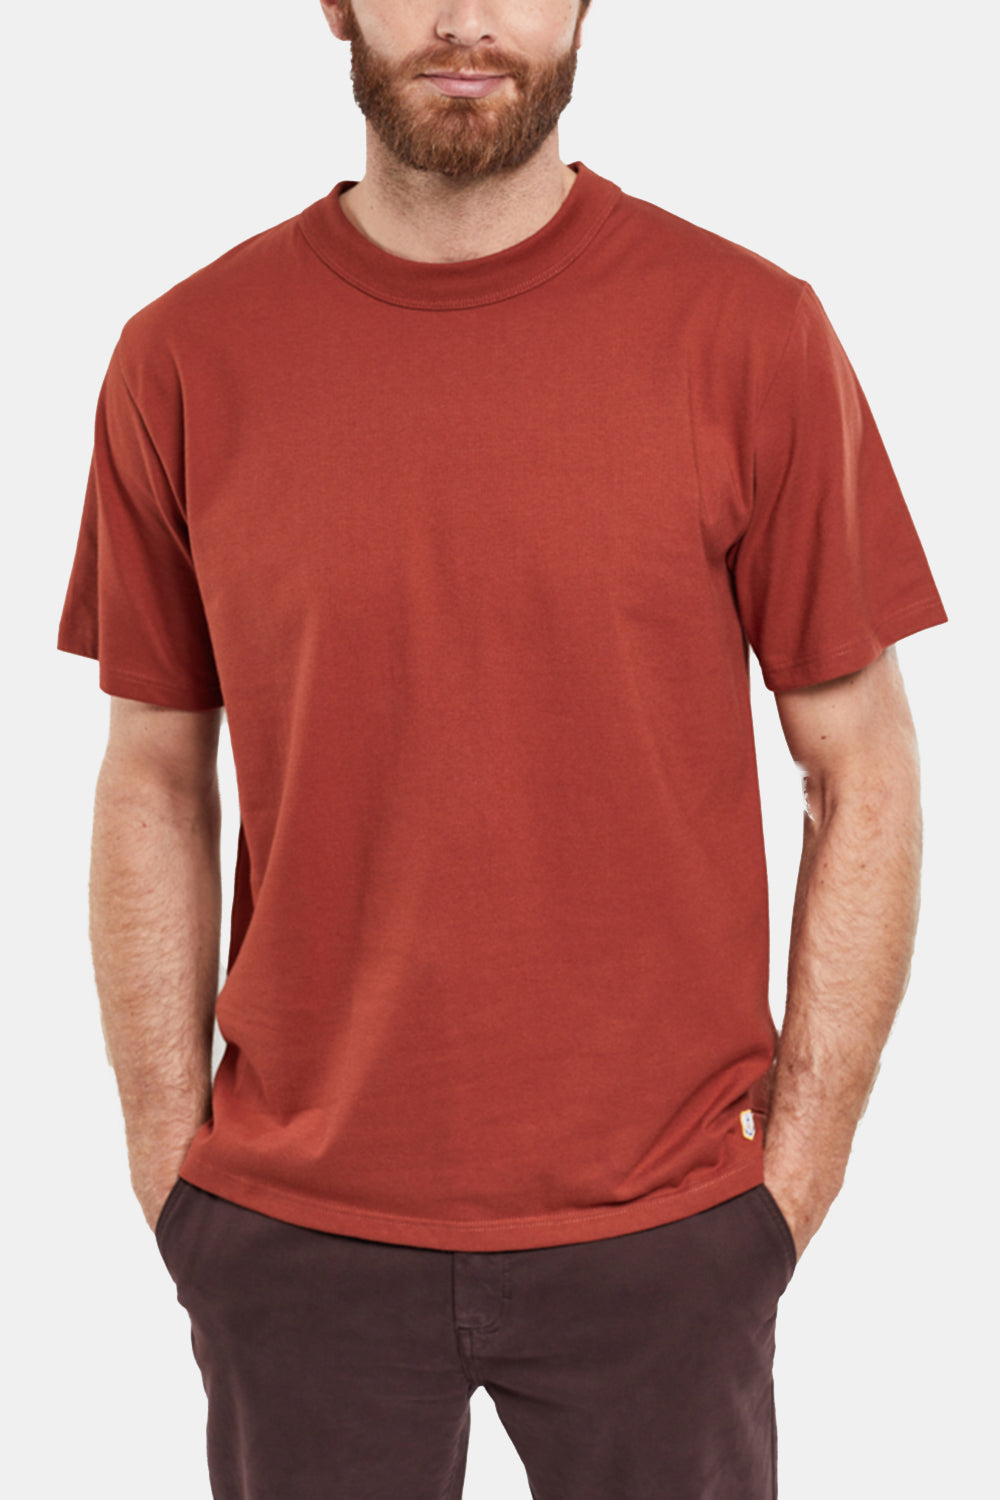 Armor Lux Heritage Pocket Organic Callac T-Shirt (Deep Paprika)
